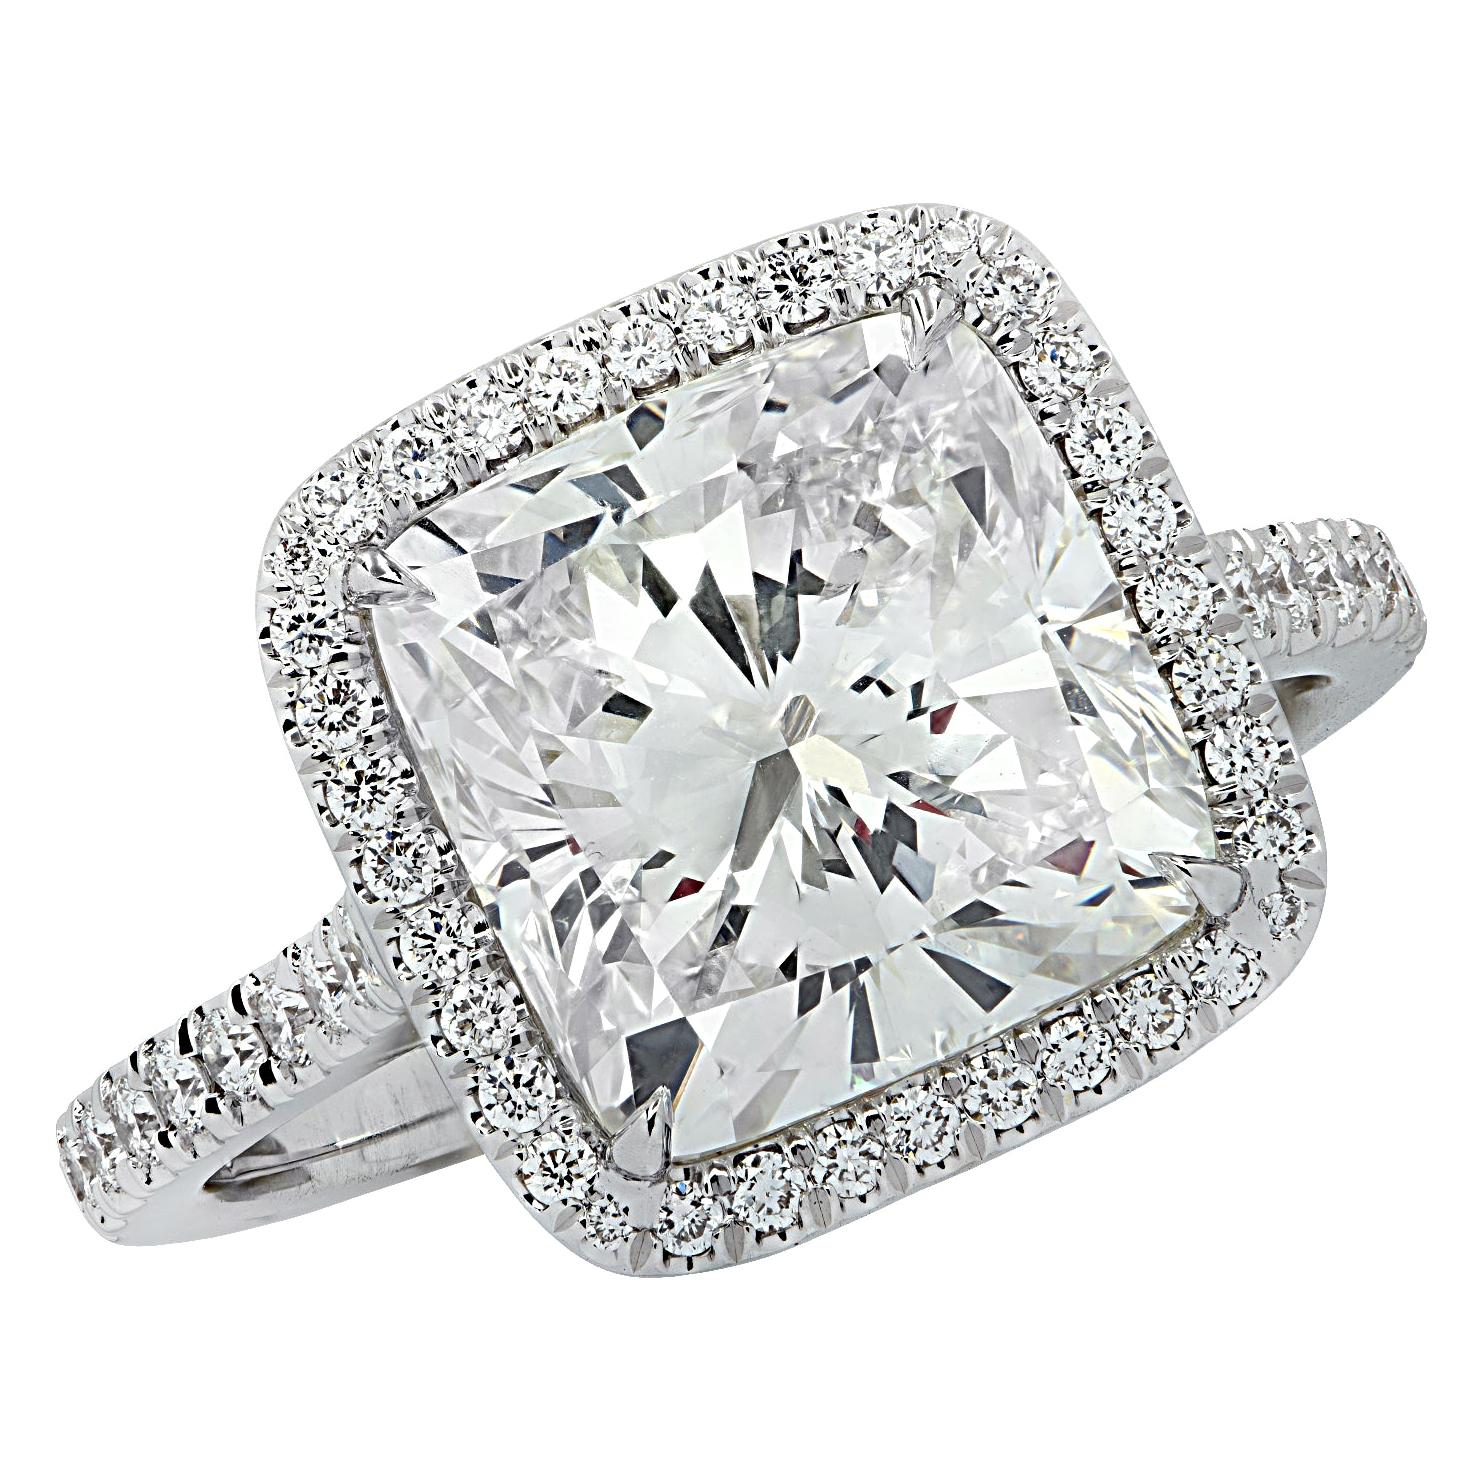 Vivid Diamonds GIA Certified 4.66 Carat Cushion Cut Diamond Engagement Ring